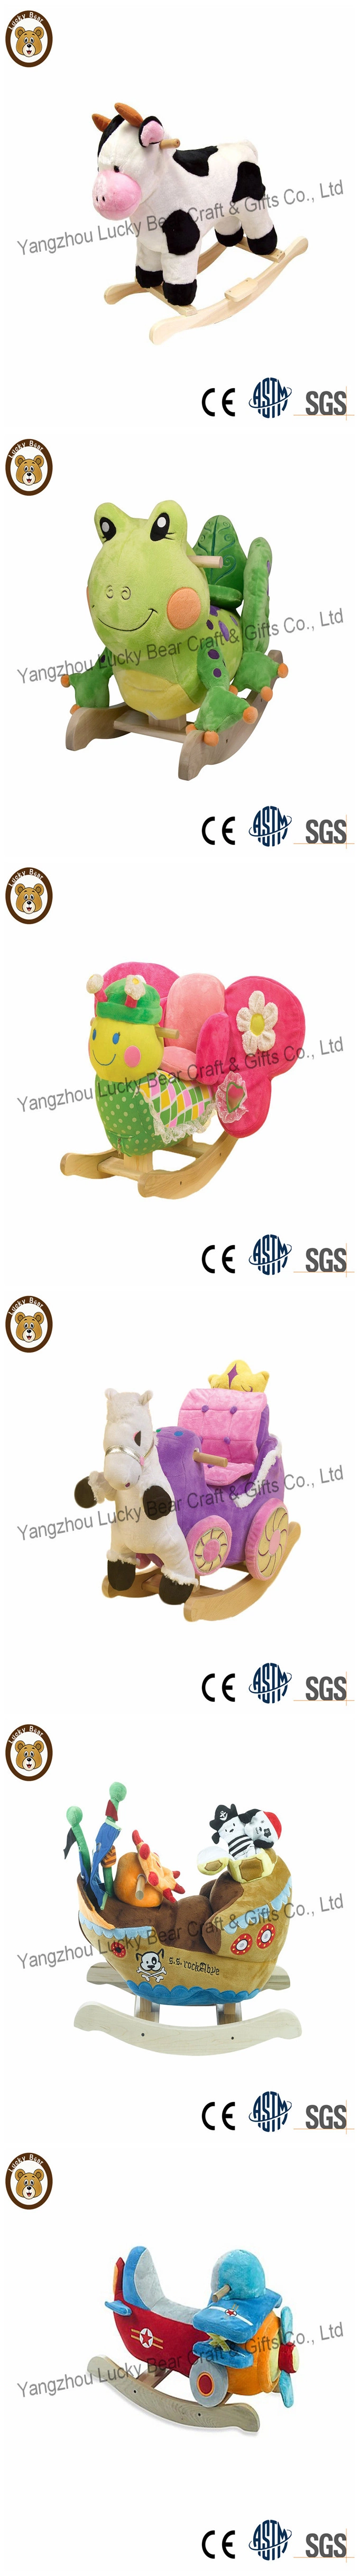 Hot Selling Animal Designs Small Soft Plush Baby Toy Rocking Horse Pony Rocker